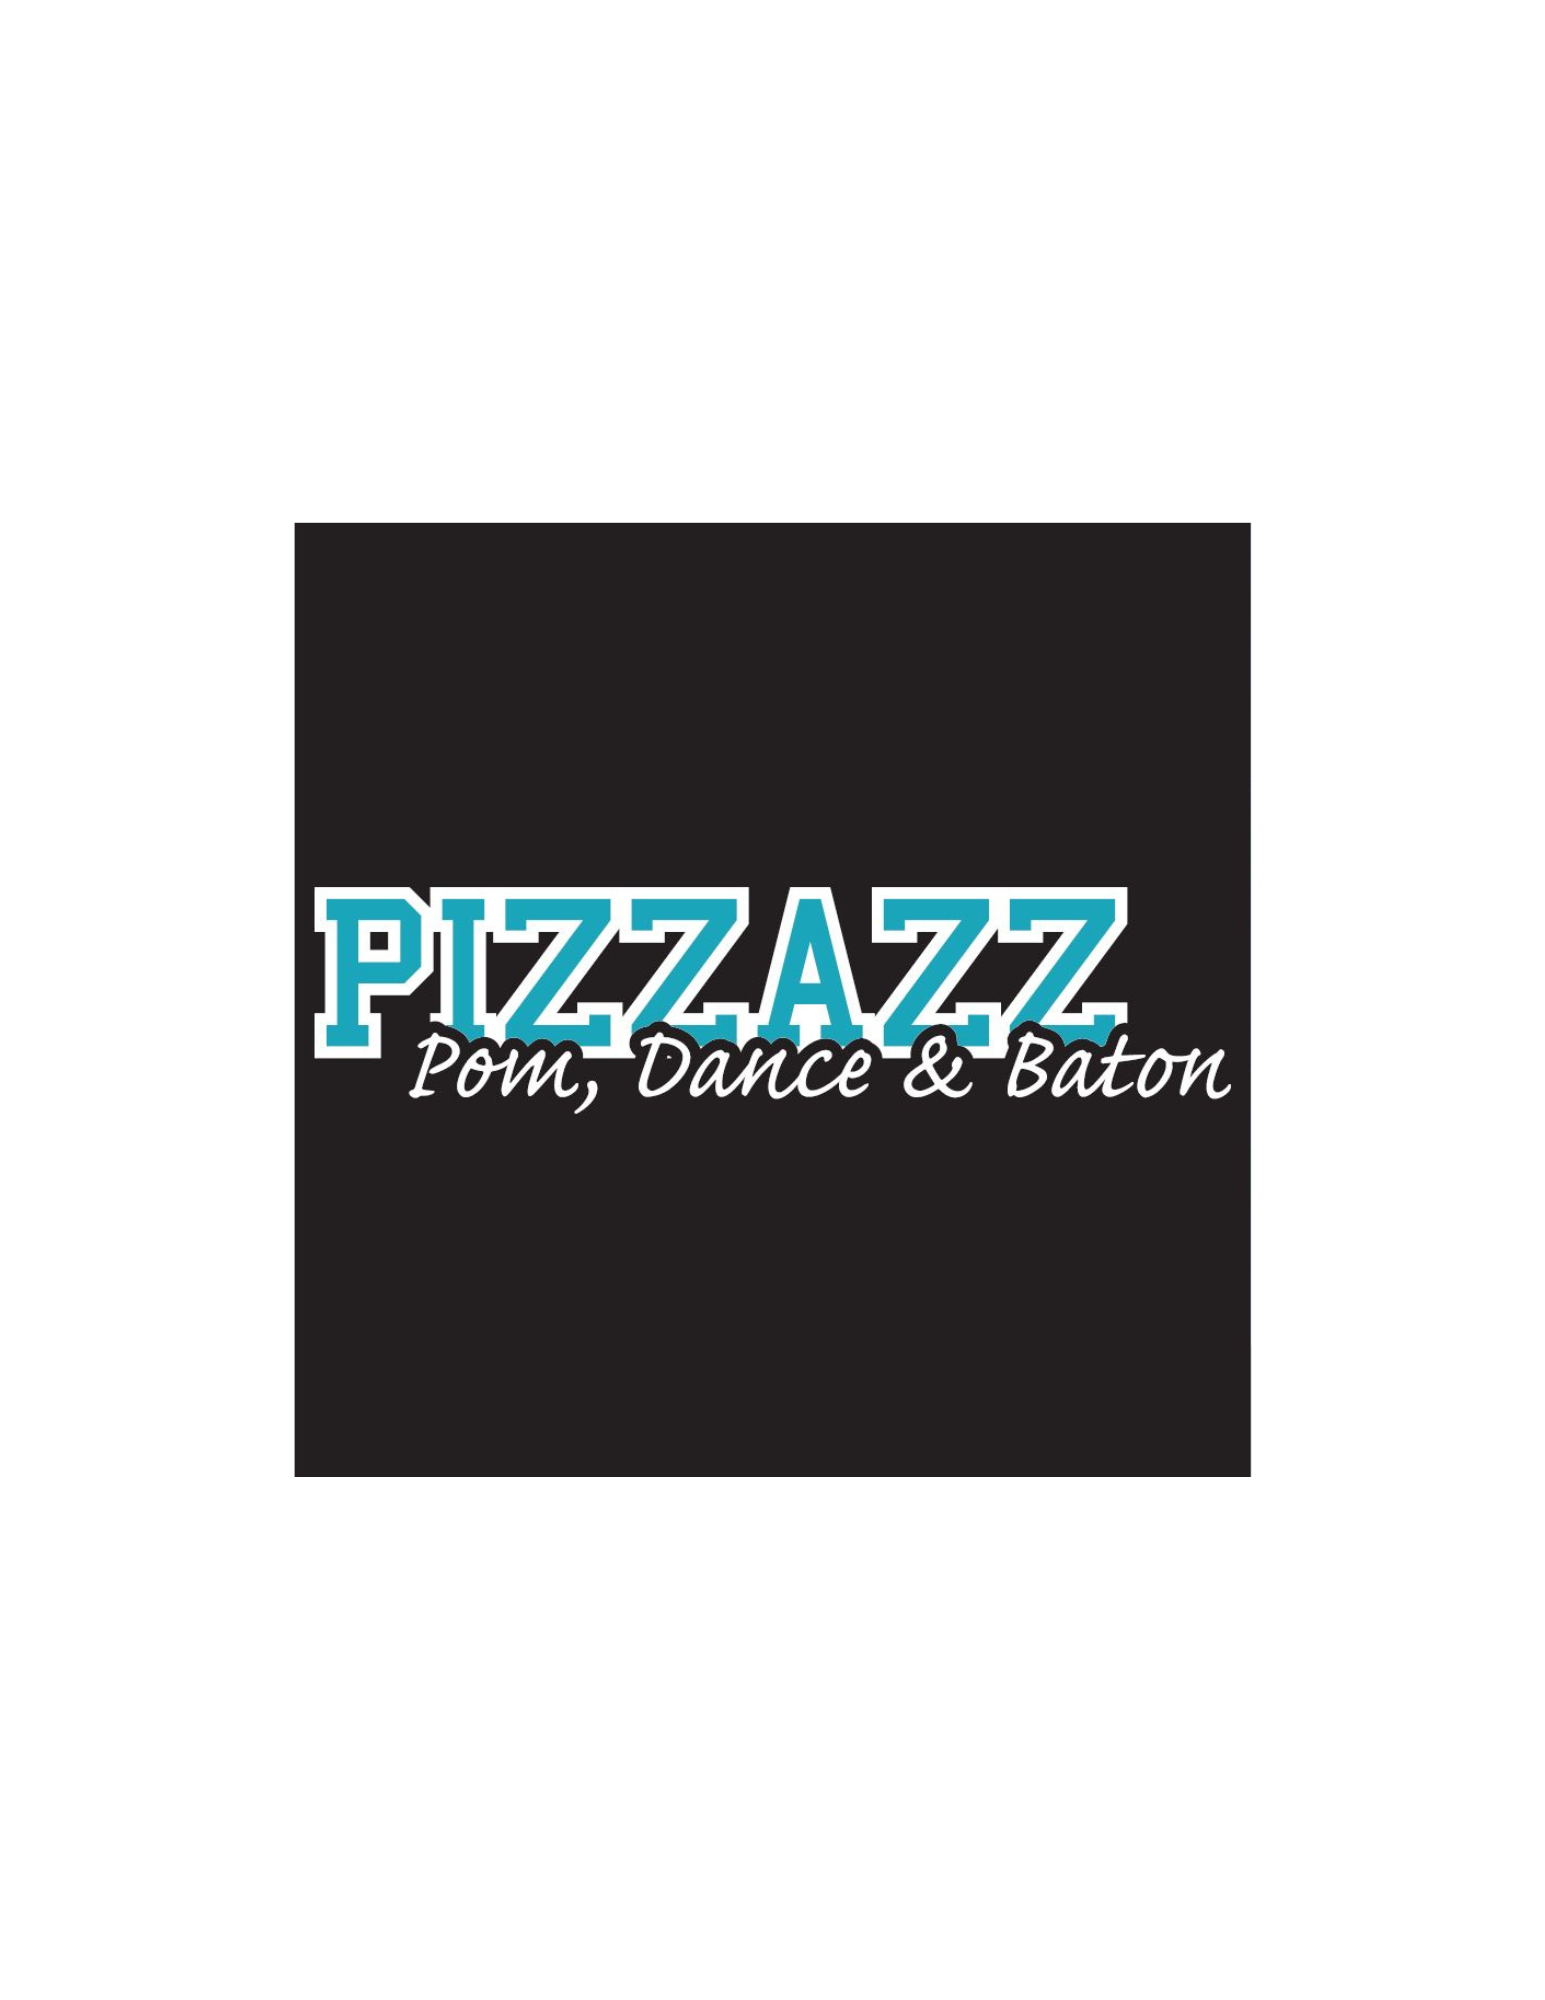 Pizzazz Pom And Dance logo